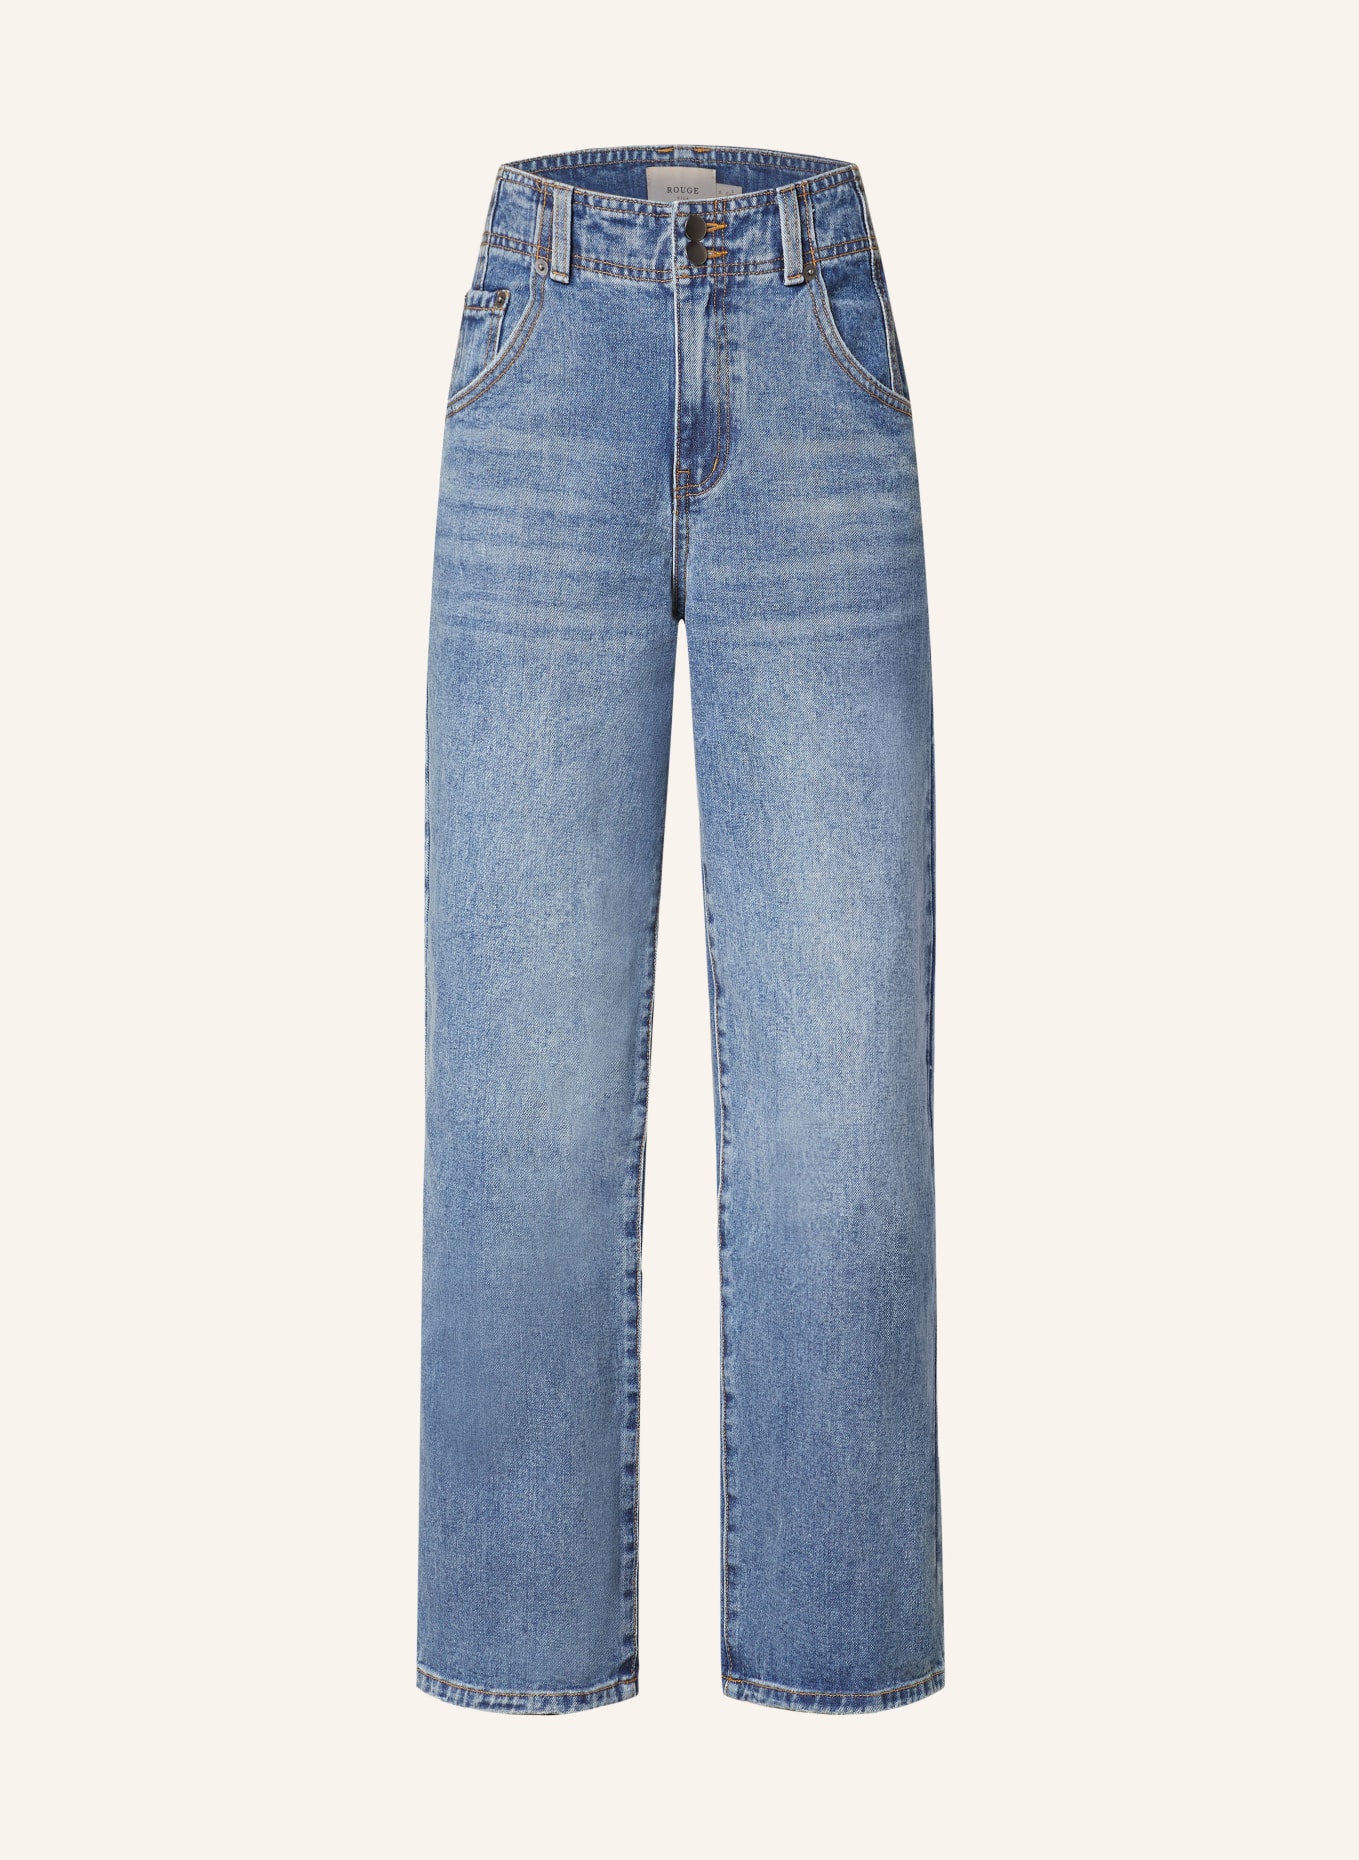 ROUGE VILA Jeans, Farbe: MEDIUM BLUE DENIM (Bild 1)